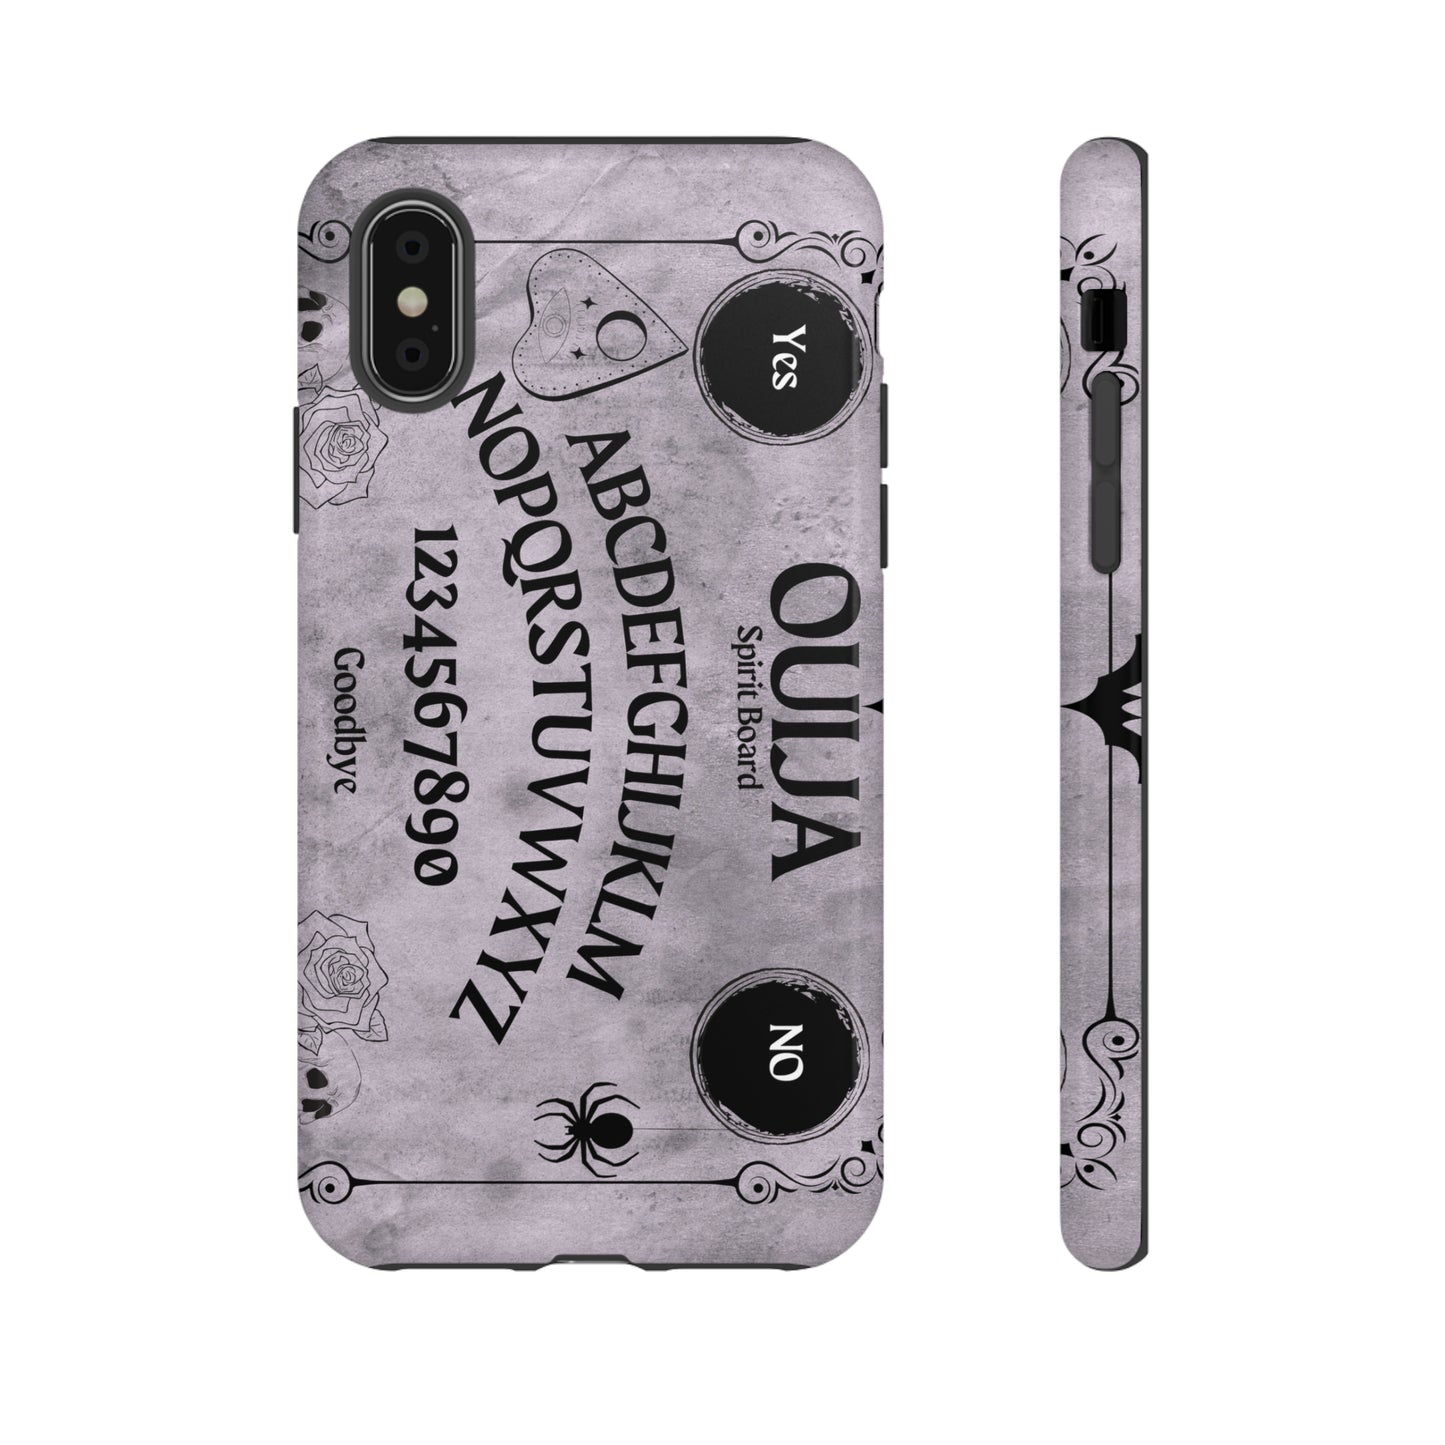 Ouija Board Tough Phone Cases For Samsung iPhone GooglePhone CaseVTZdesignsiPhone XGlossyAccessoriesGlossyhalloween